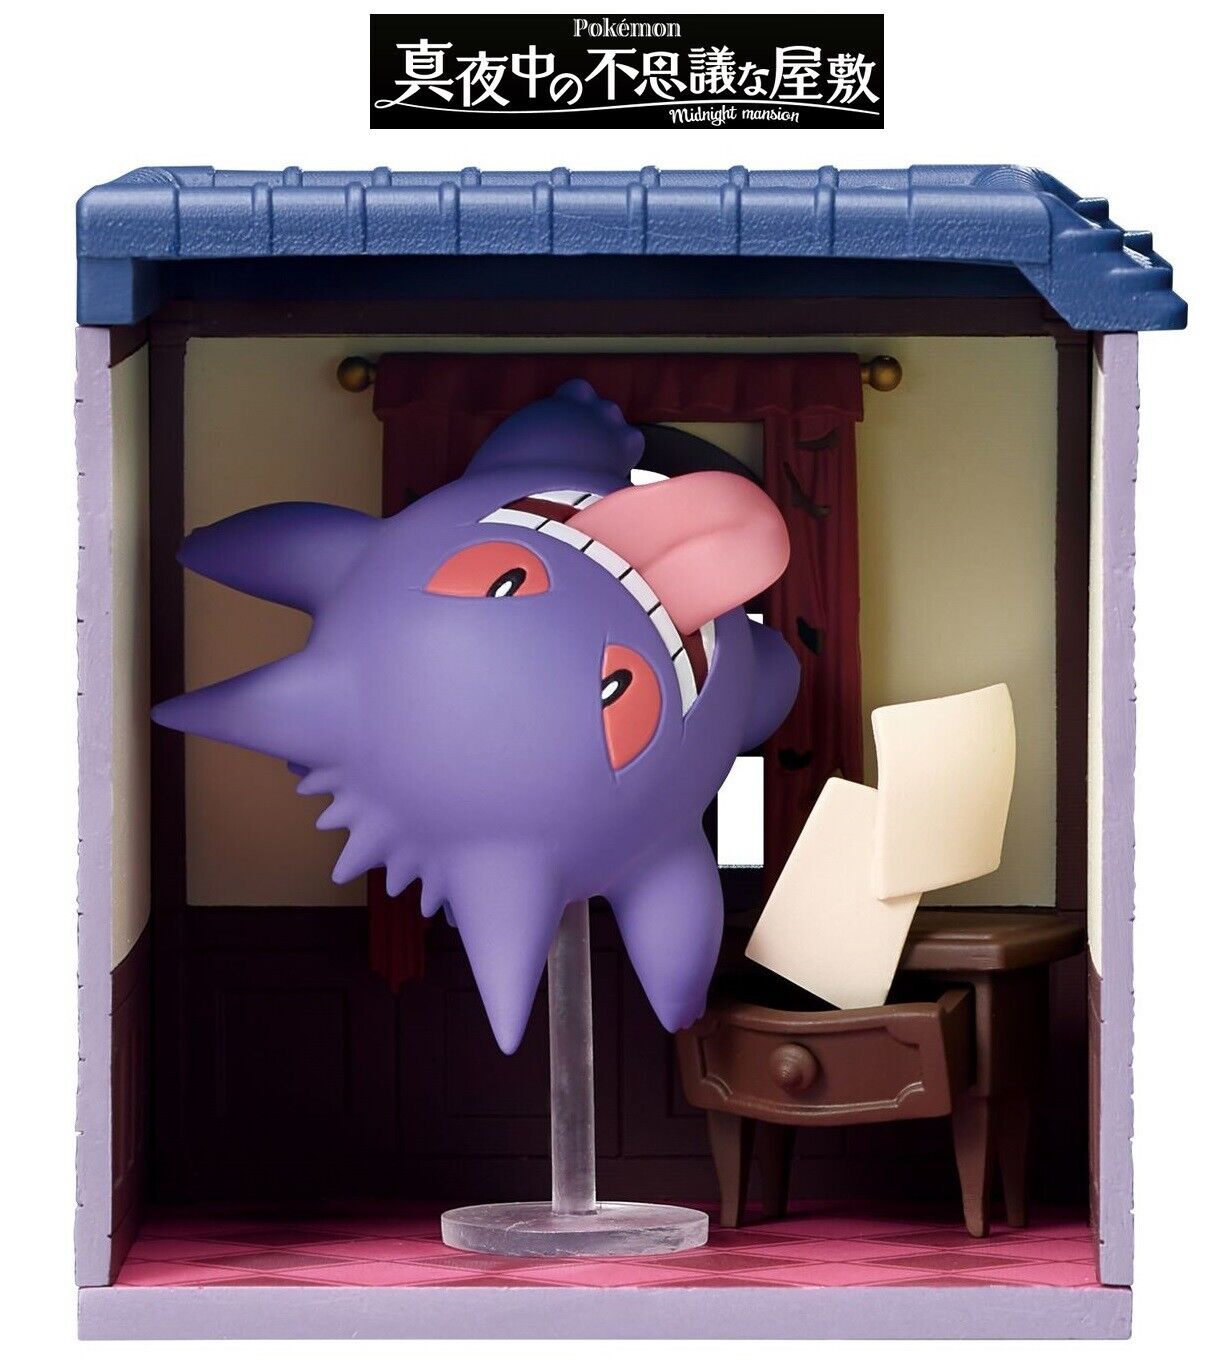 RE-MENT Pokemon Mysterious Midnight Mansion Mini Figure Diorama Toy #3 Gengar